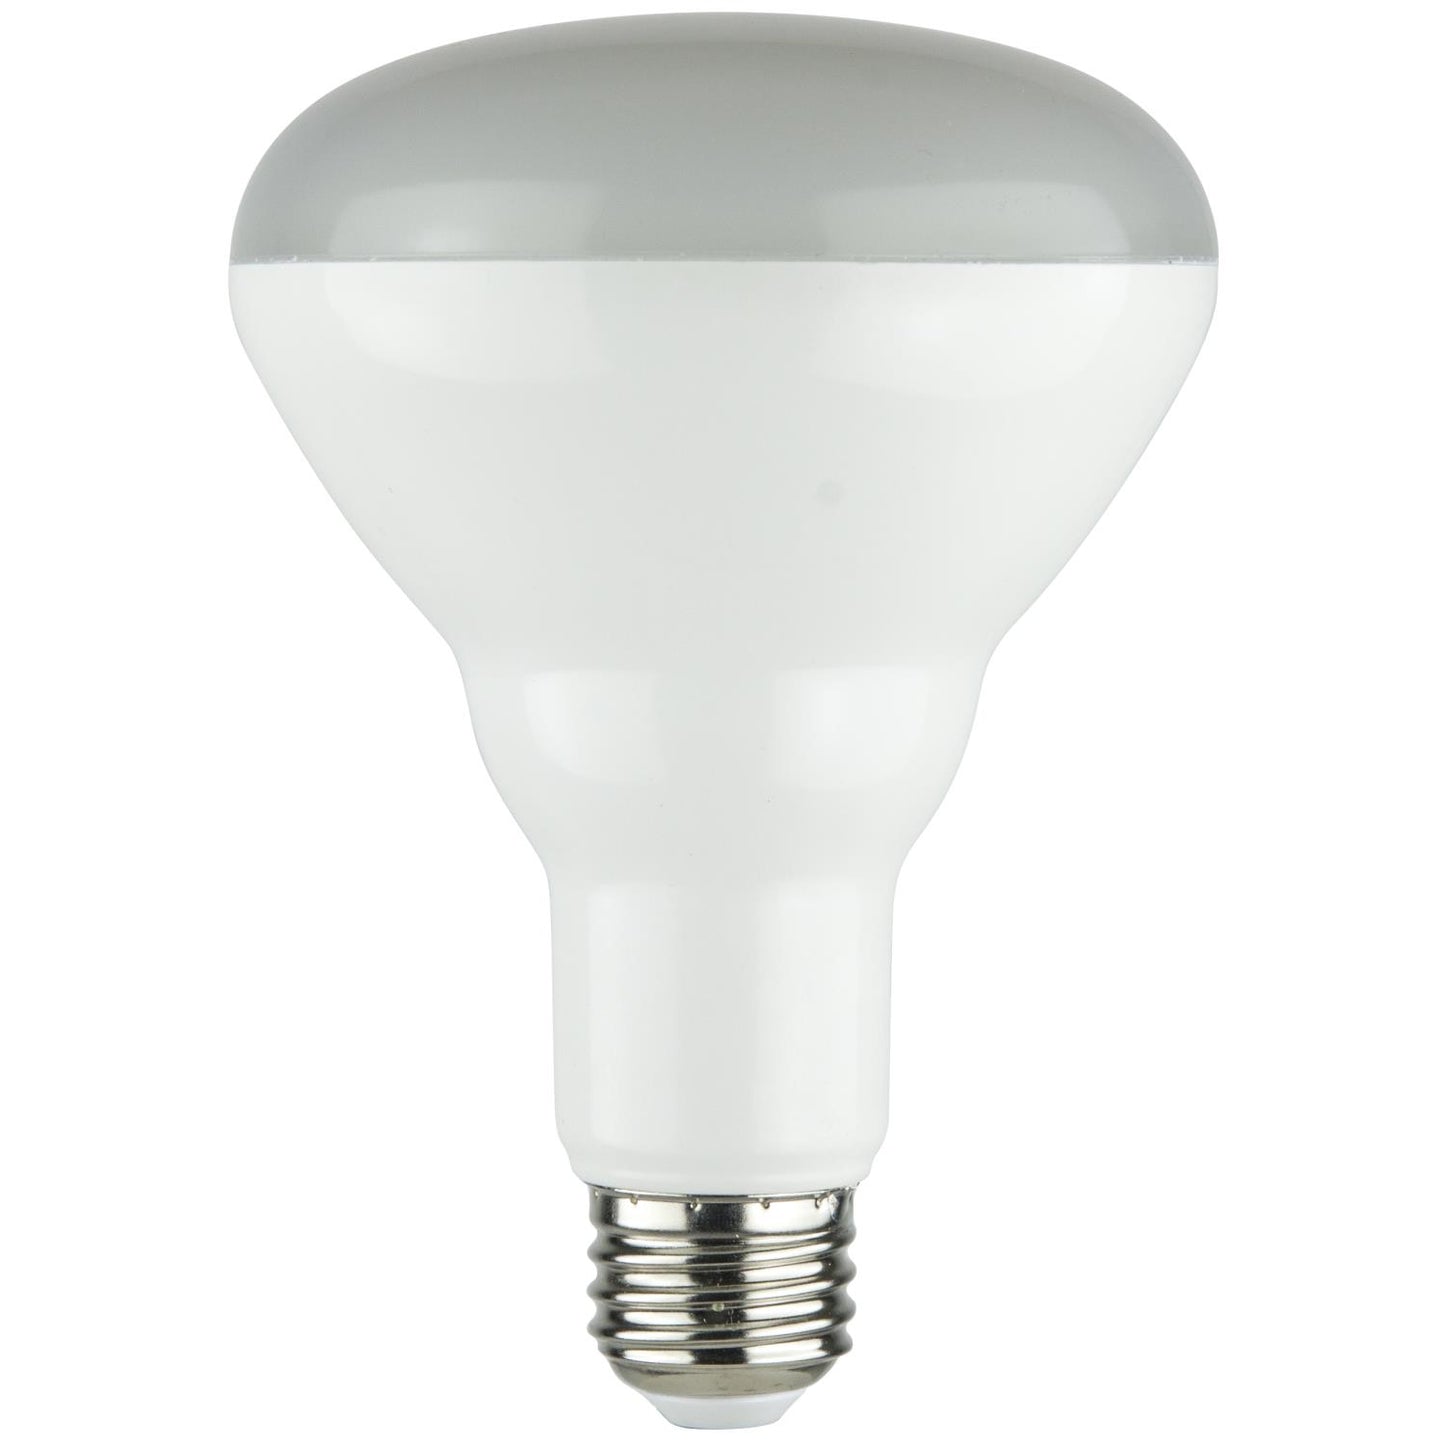 Sunlite LED BR30 Reflector 12W (65W Equivalent) Light Bulb Medium (E26) Base, Cool white